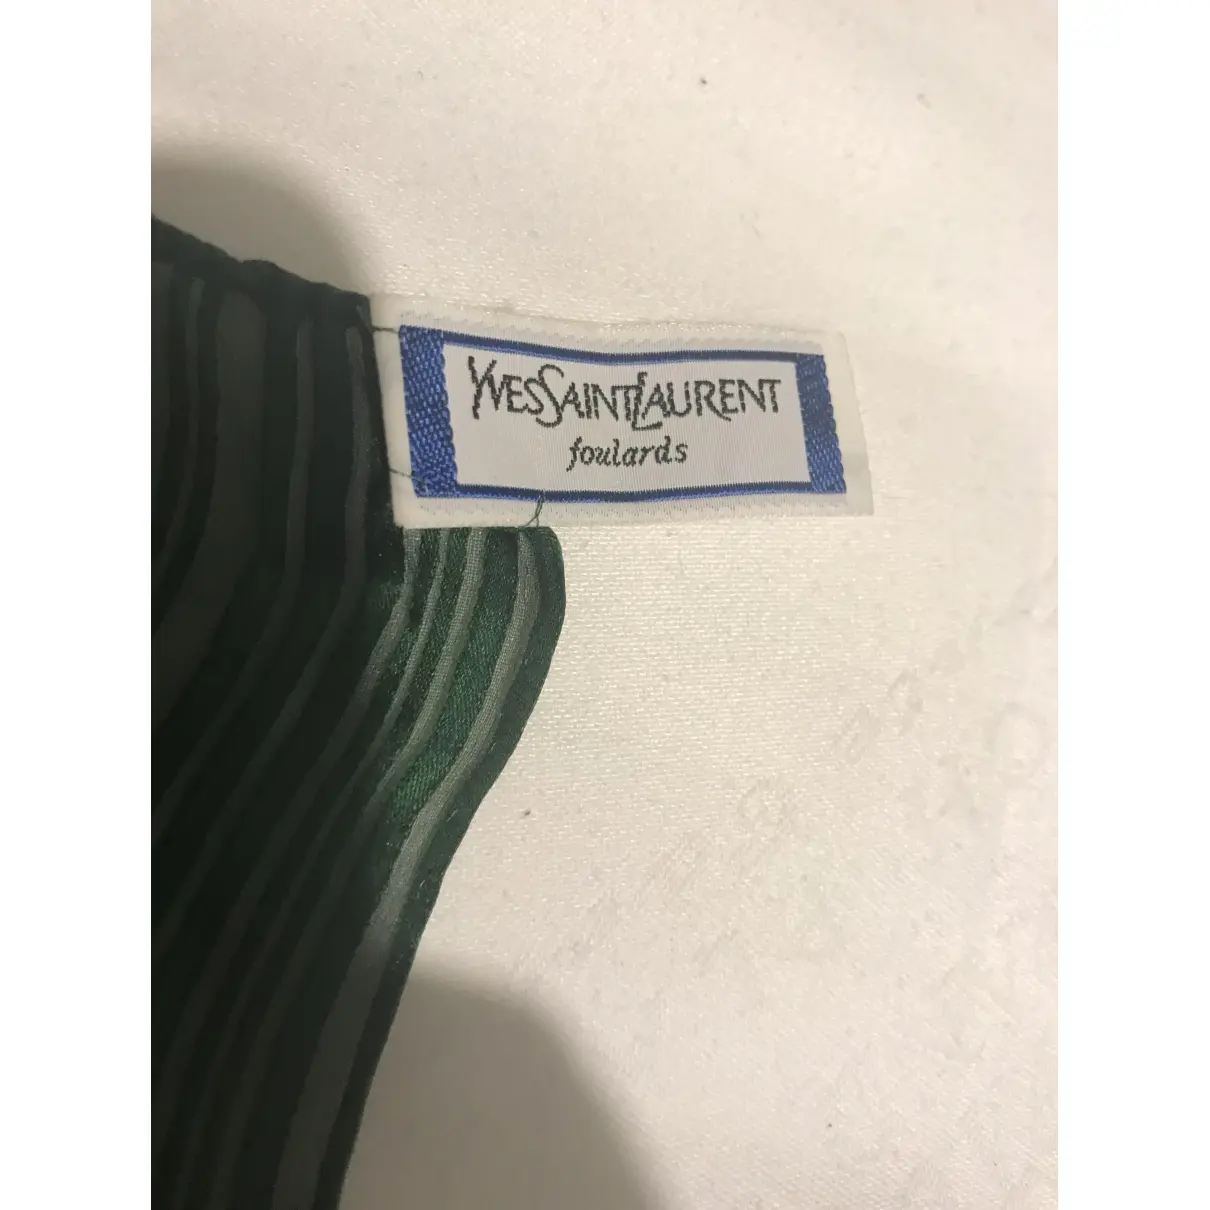 Buy Yves Saint Laurent Silk handkerchief online - Vintage